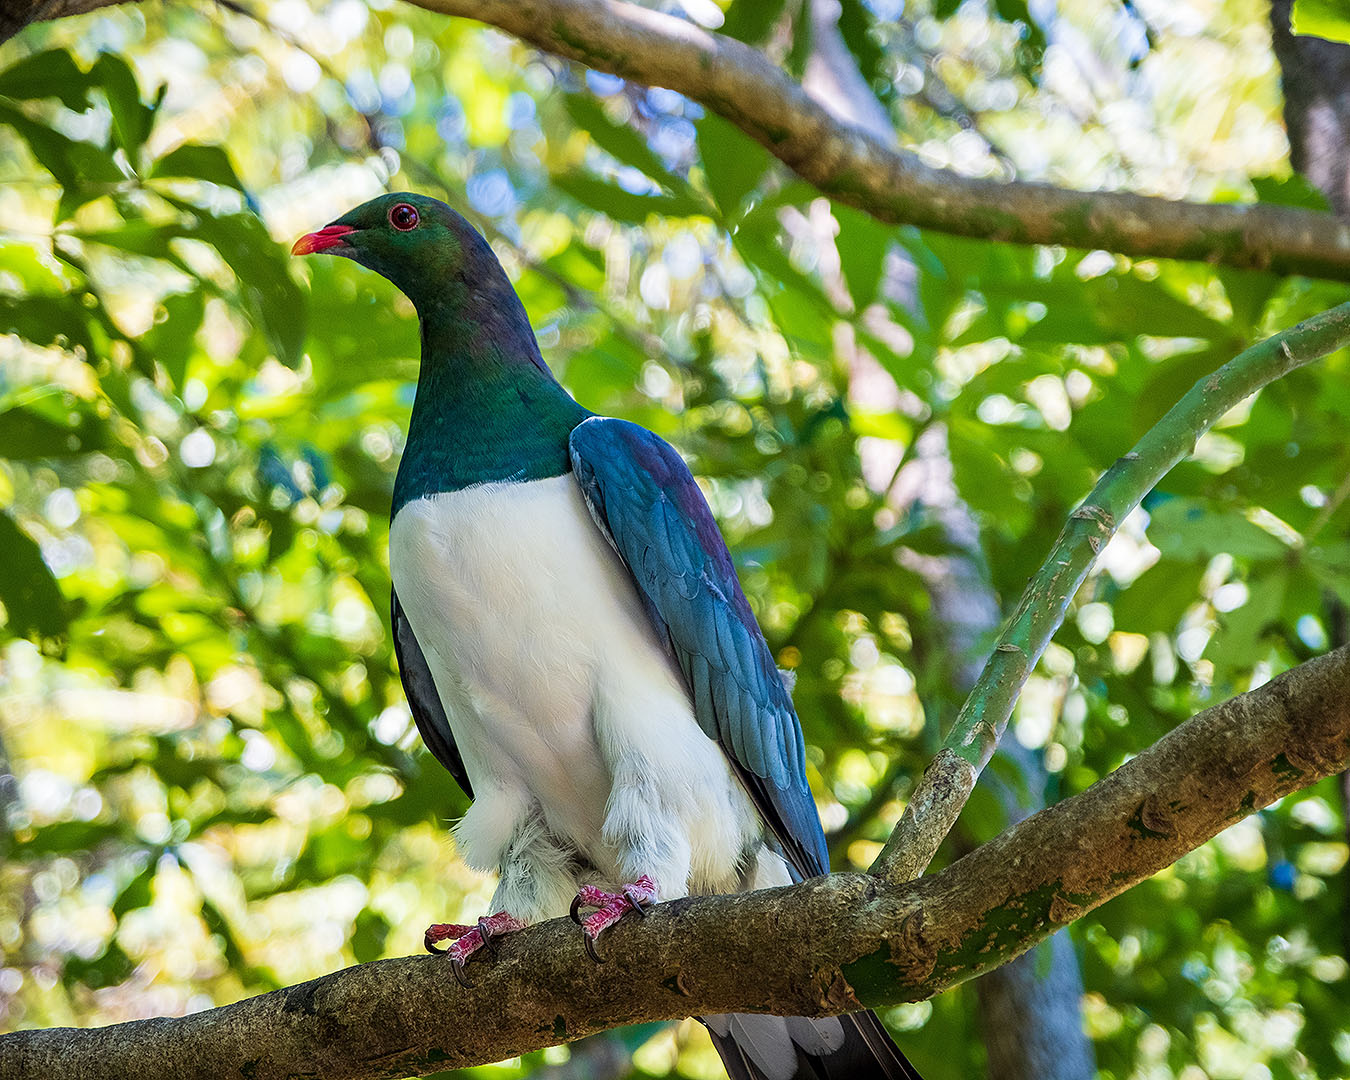 A kereru sits on a branch at the stunning Tiritiri Matangi island.